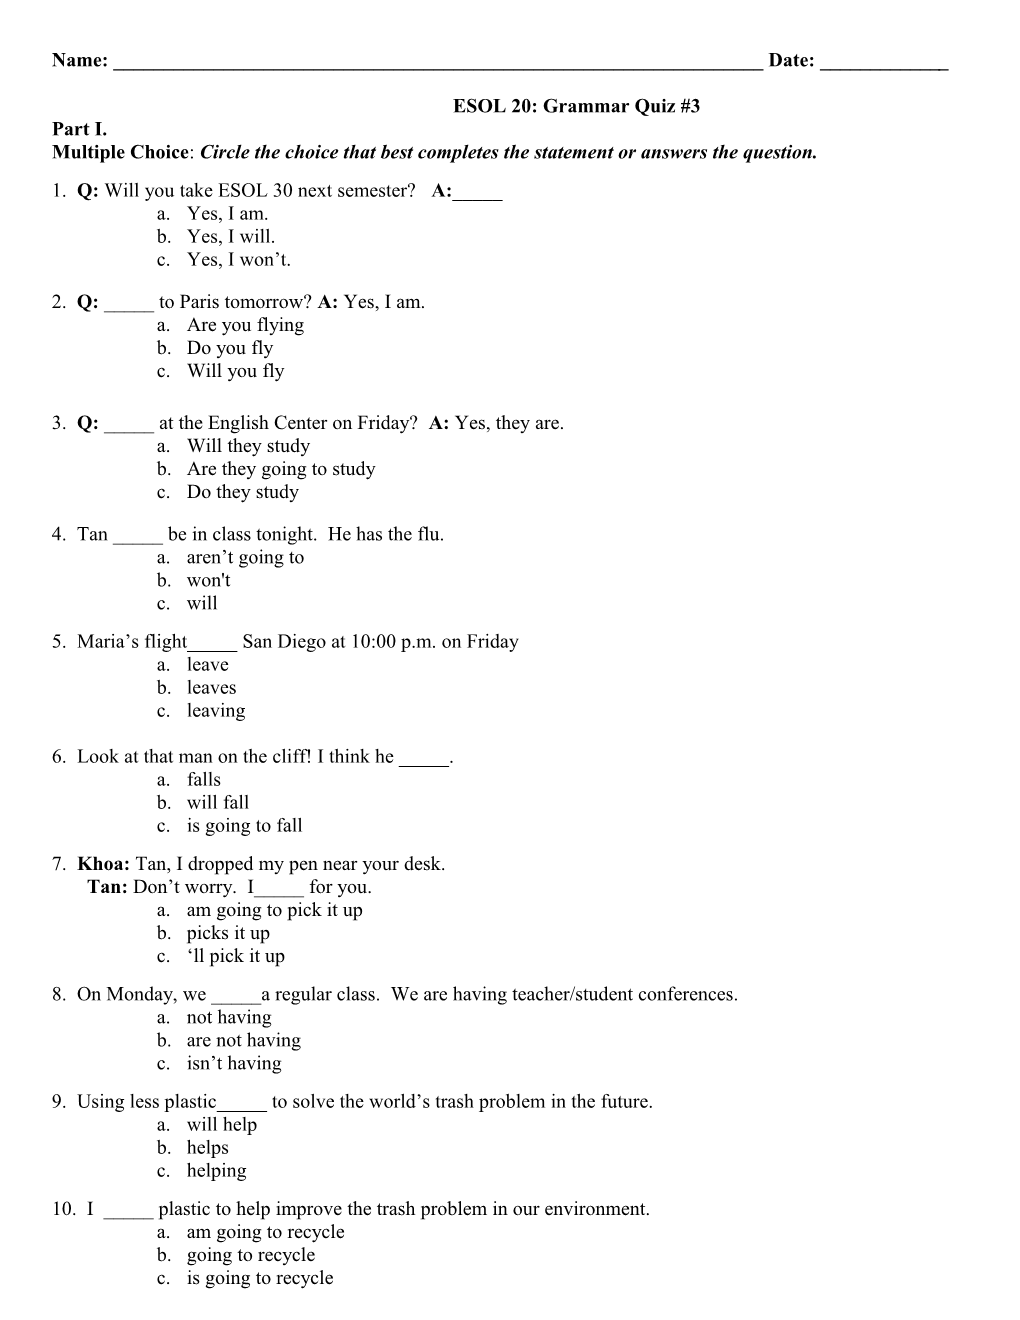 ESOL 20: Grammar Quiz #3